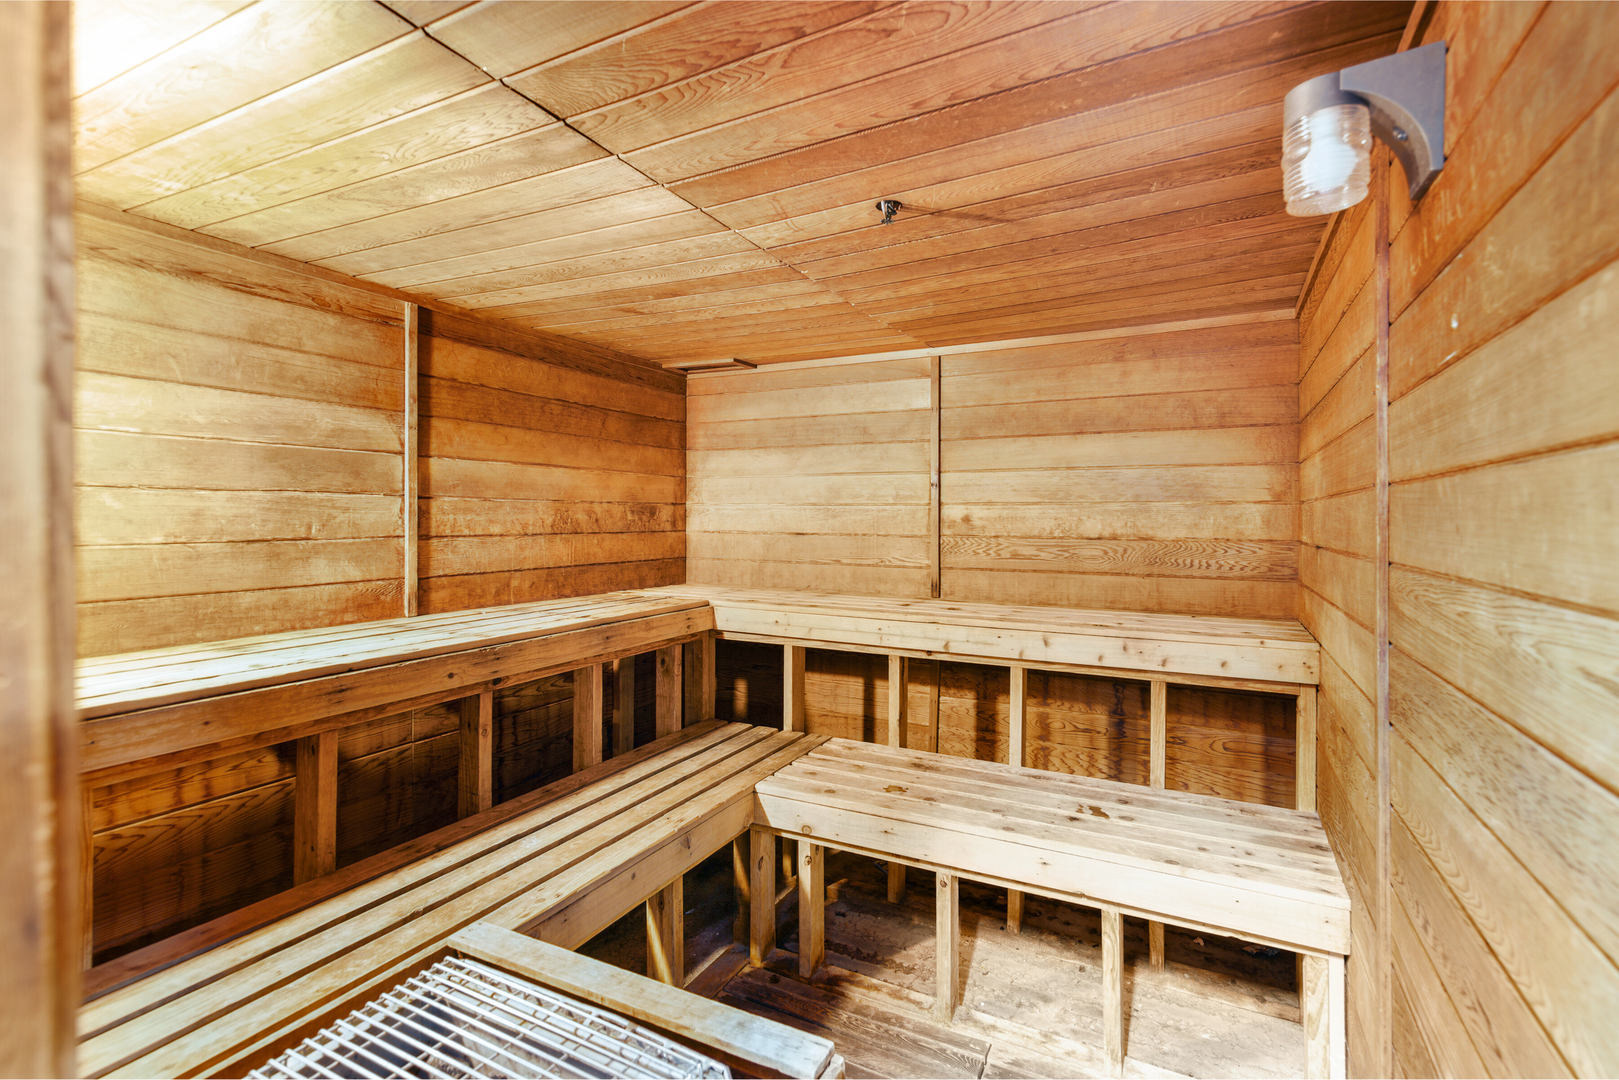 Relax & unwind in the community sauna